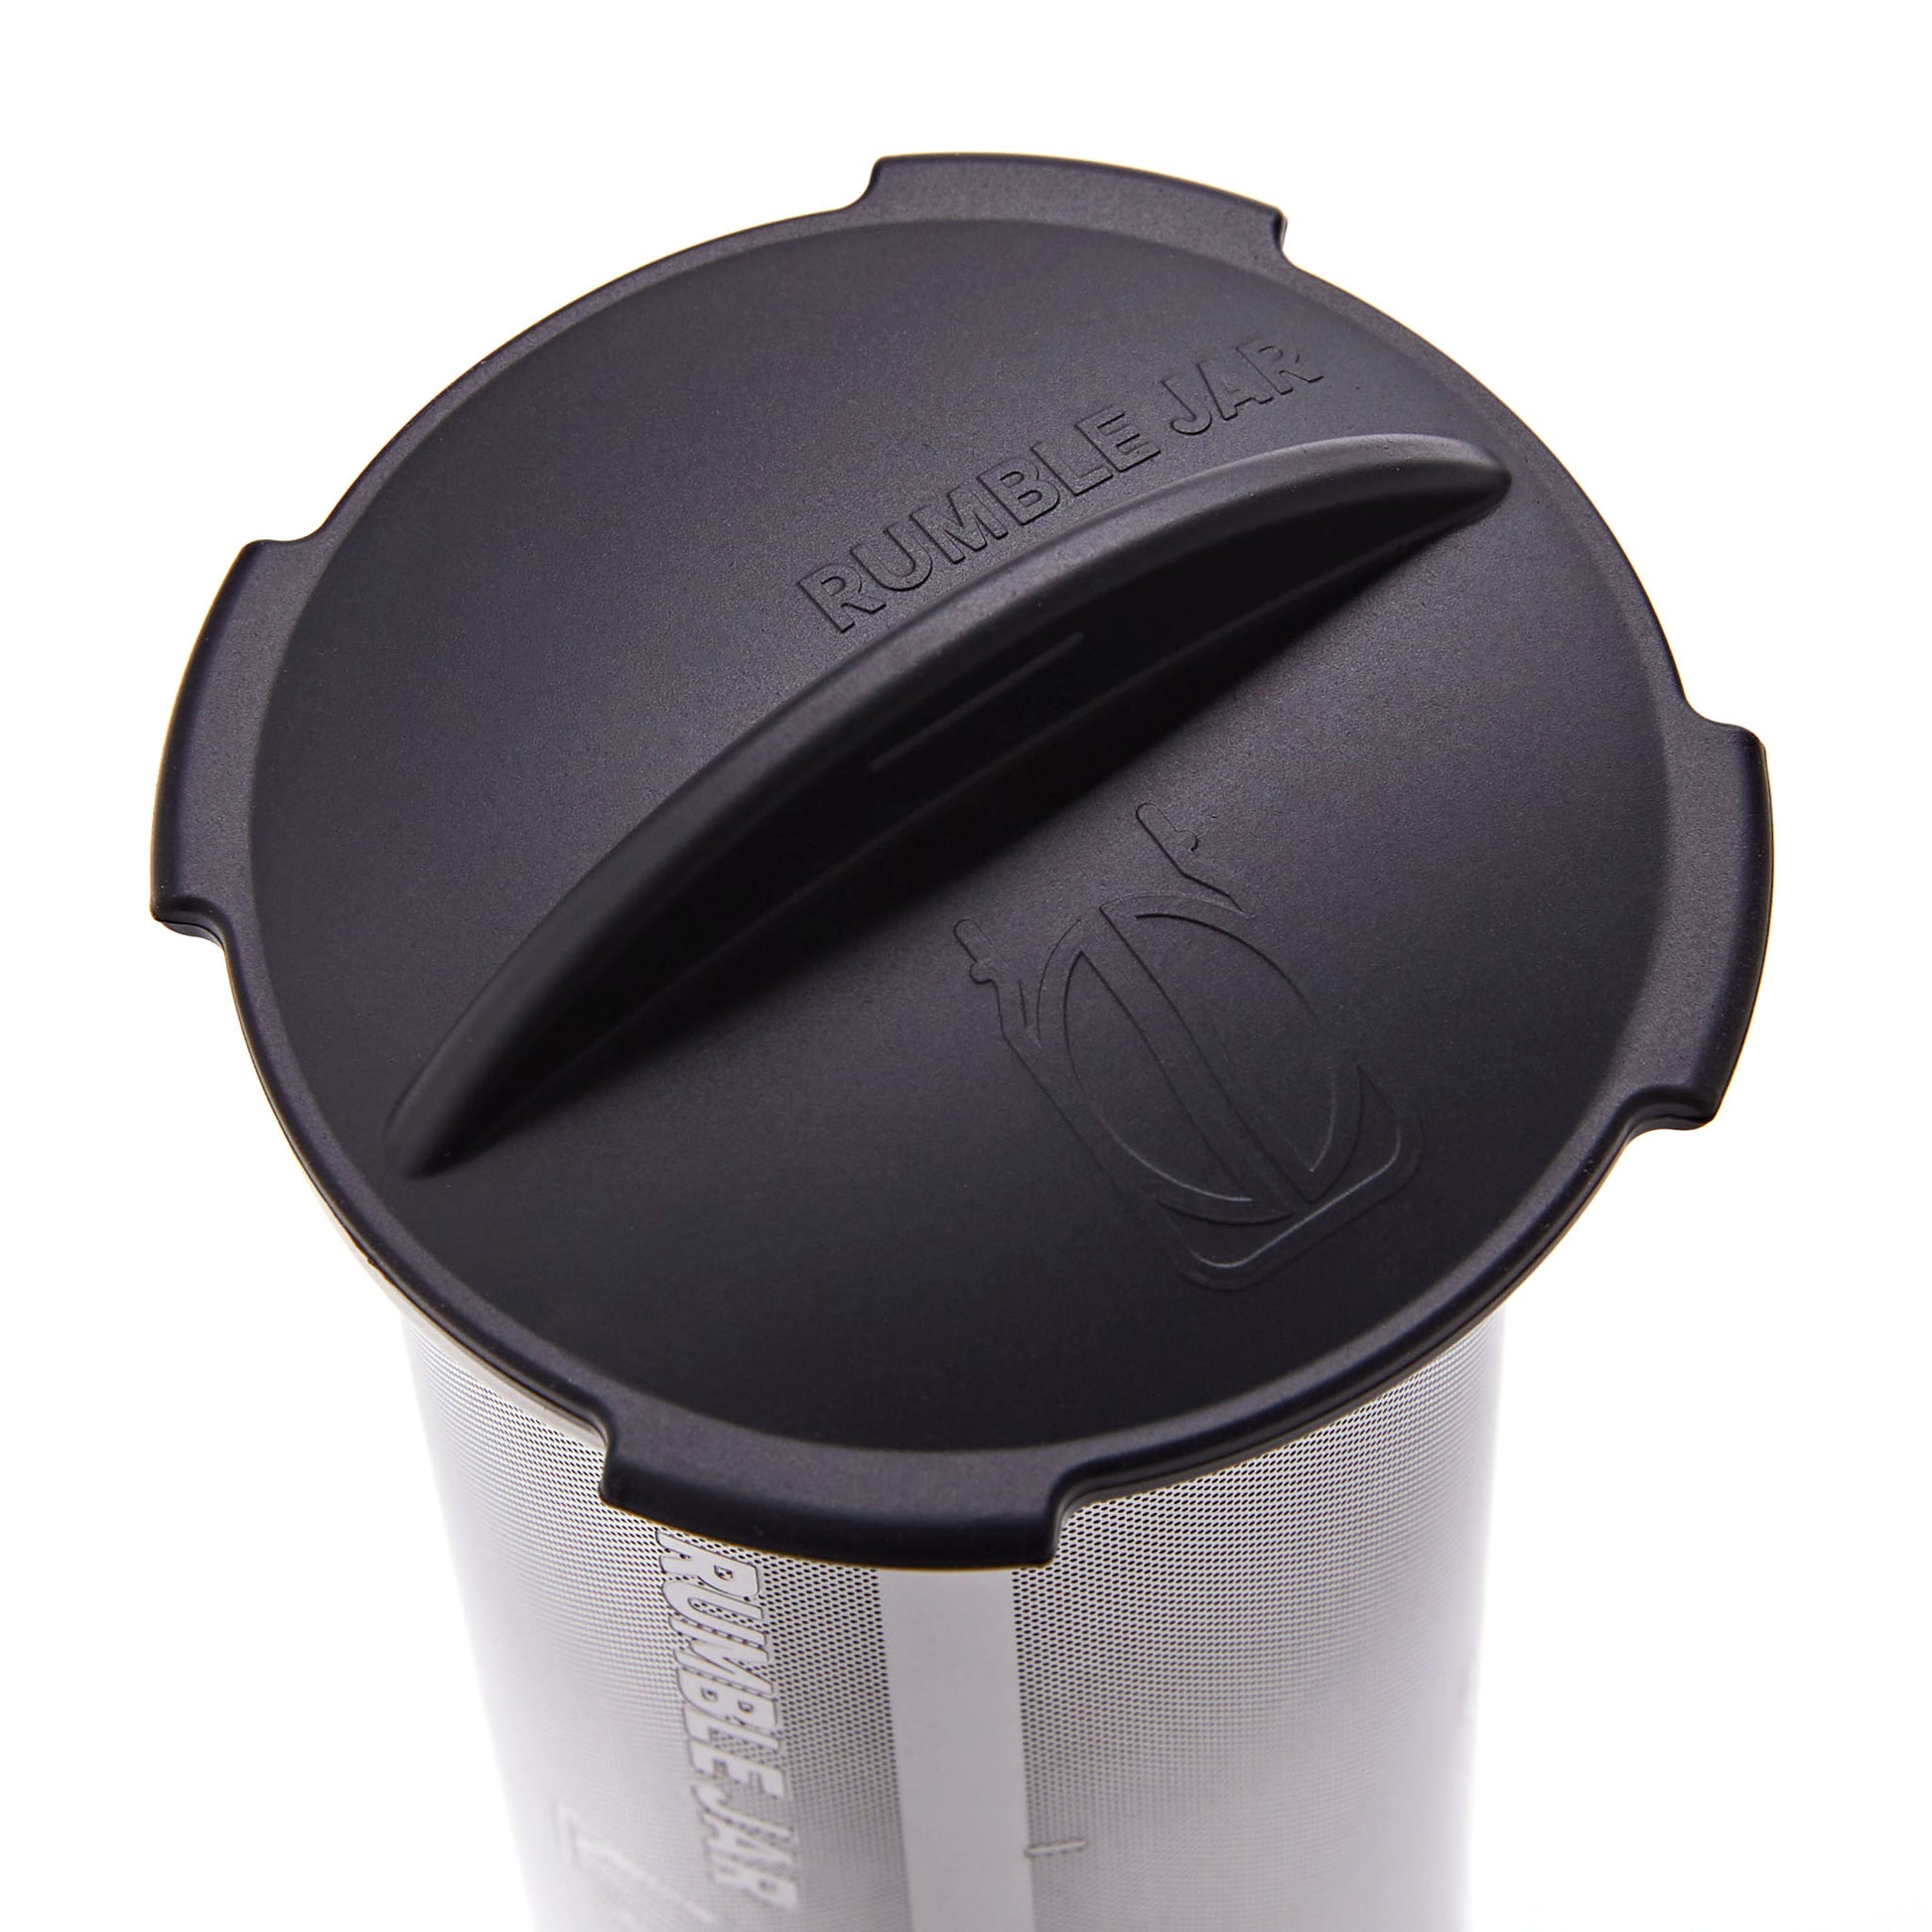 Rumble Jar's silicone cap in the Dark Black color